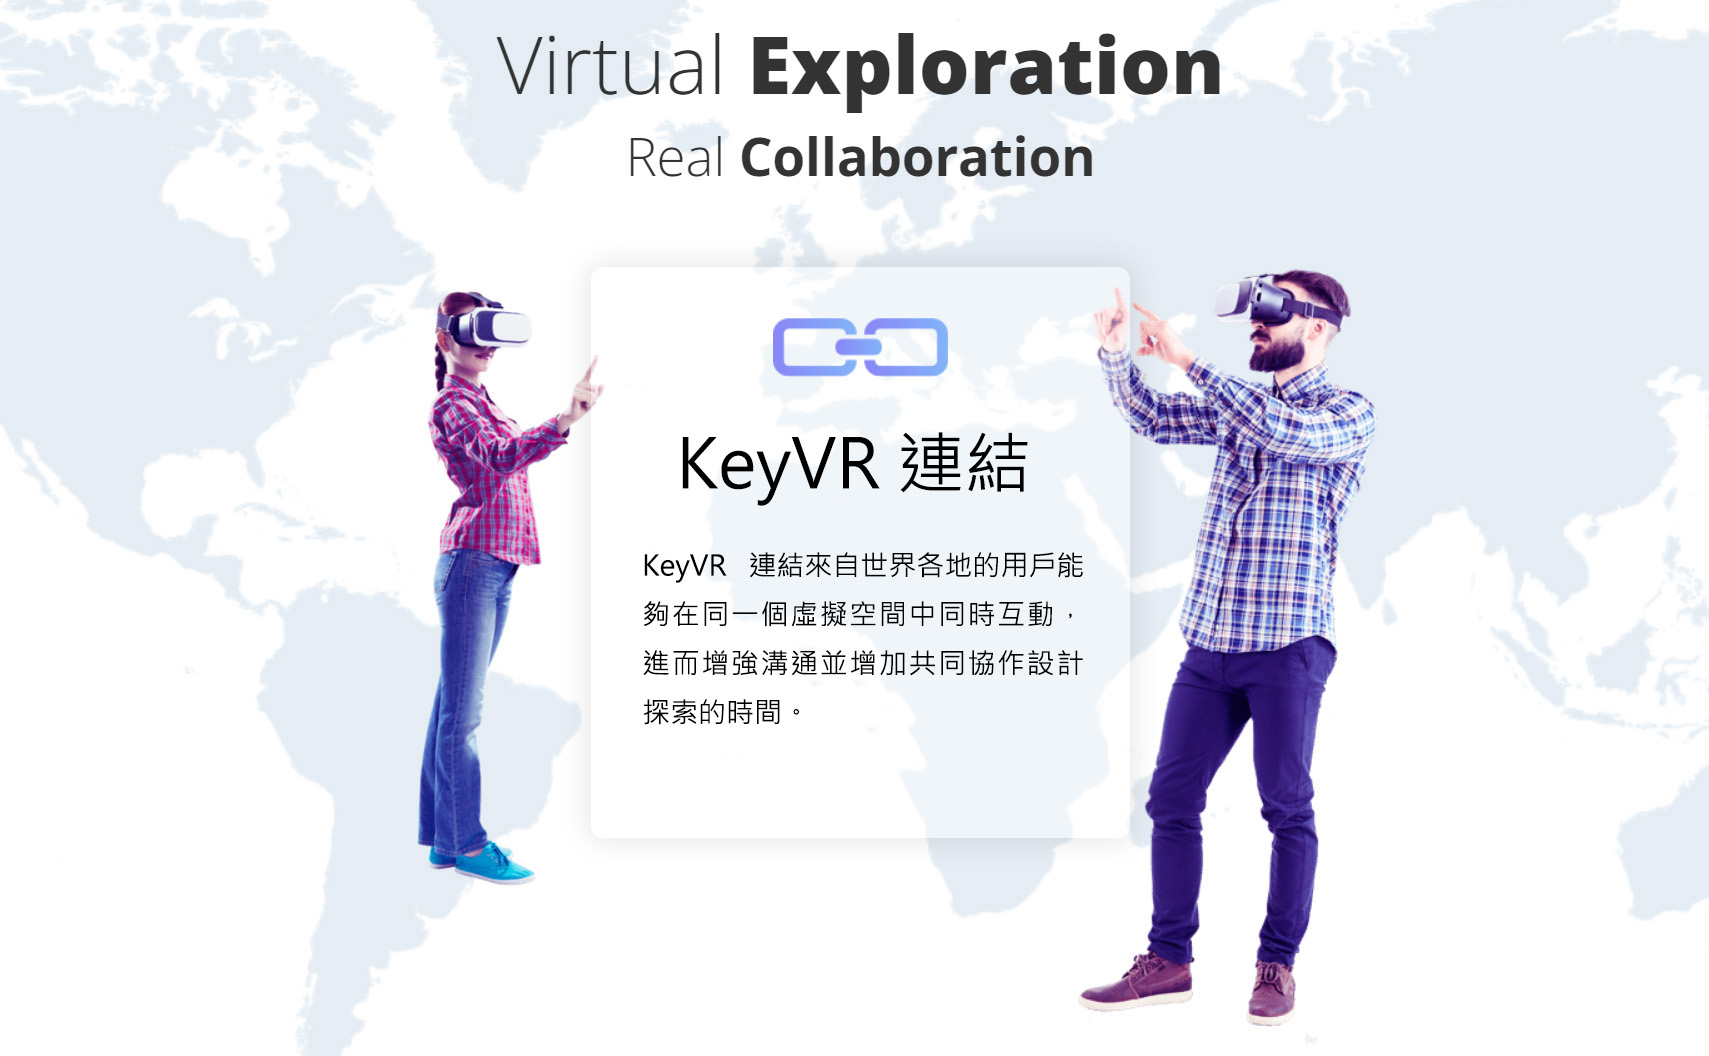 KeyVR 連結來自世界各地的用戶能夠在同一個虛擬空間中同時互動，進而增強溝通並增加共同協作設計探索的時間。